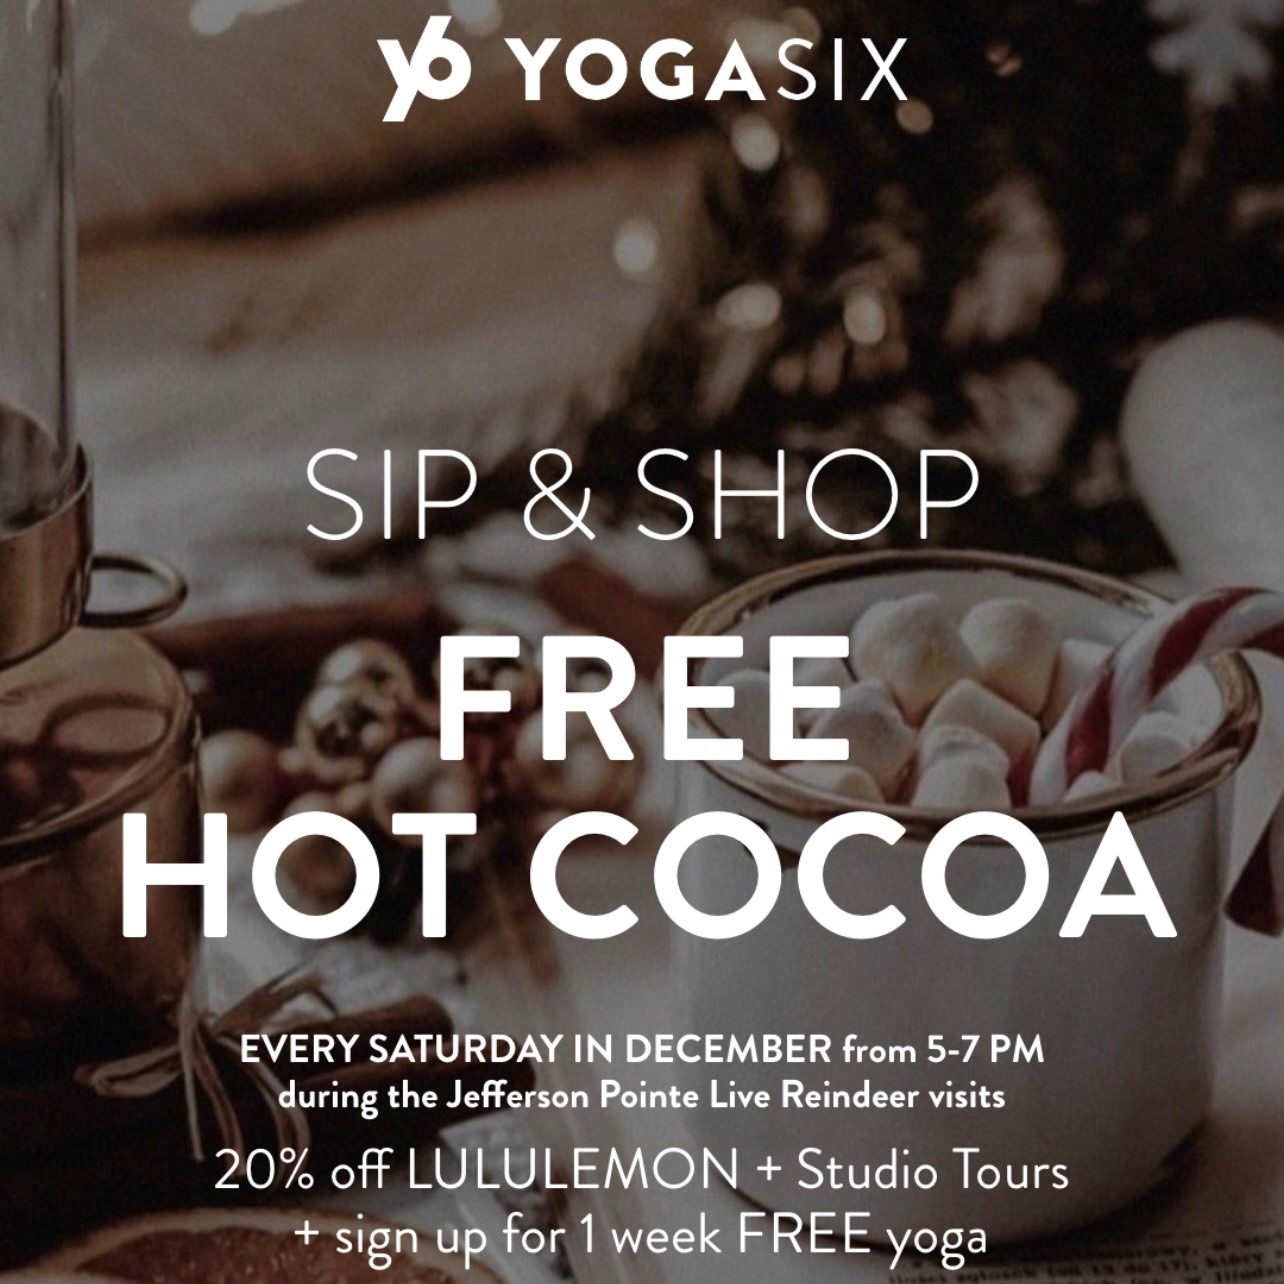 Sip & Shop at YogaSix